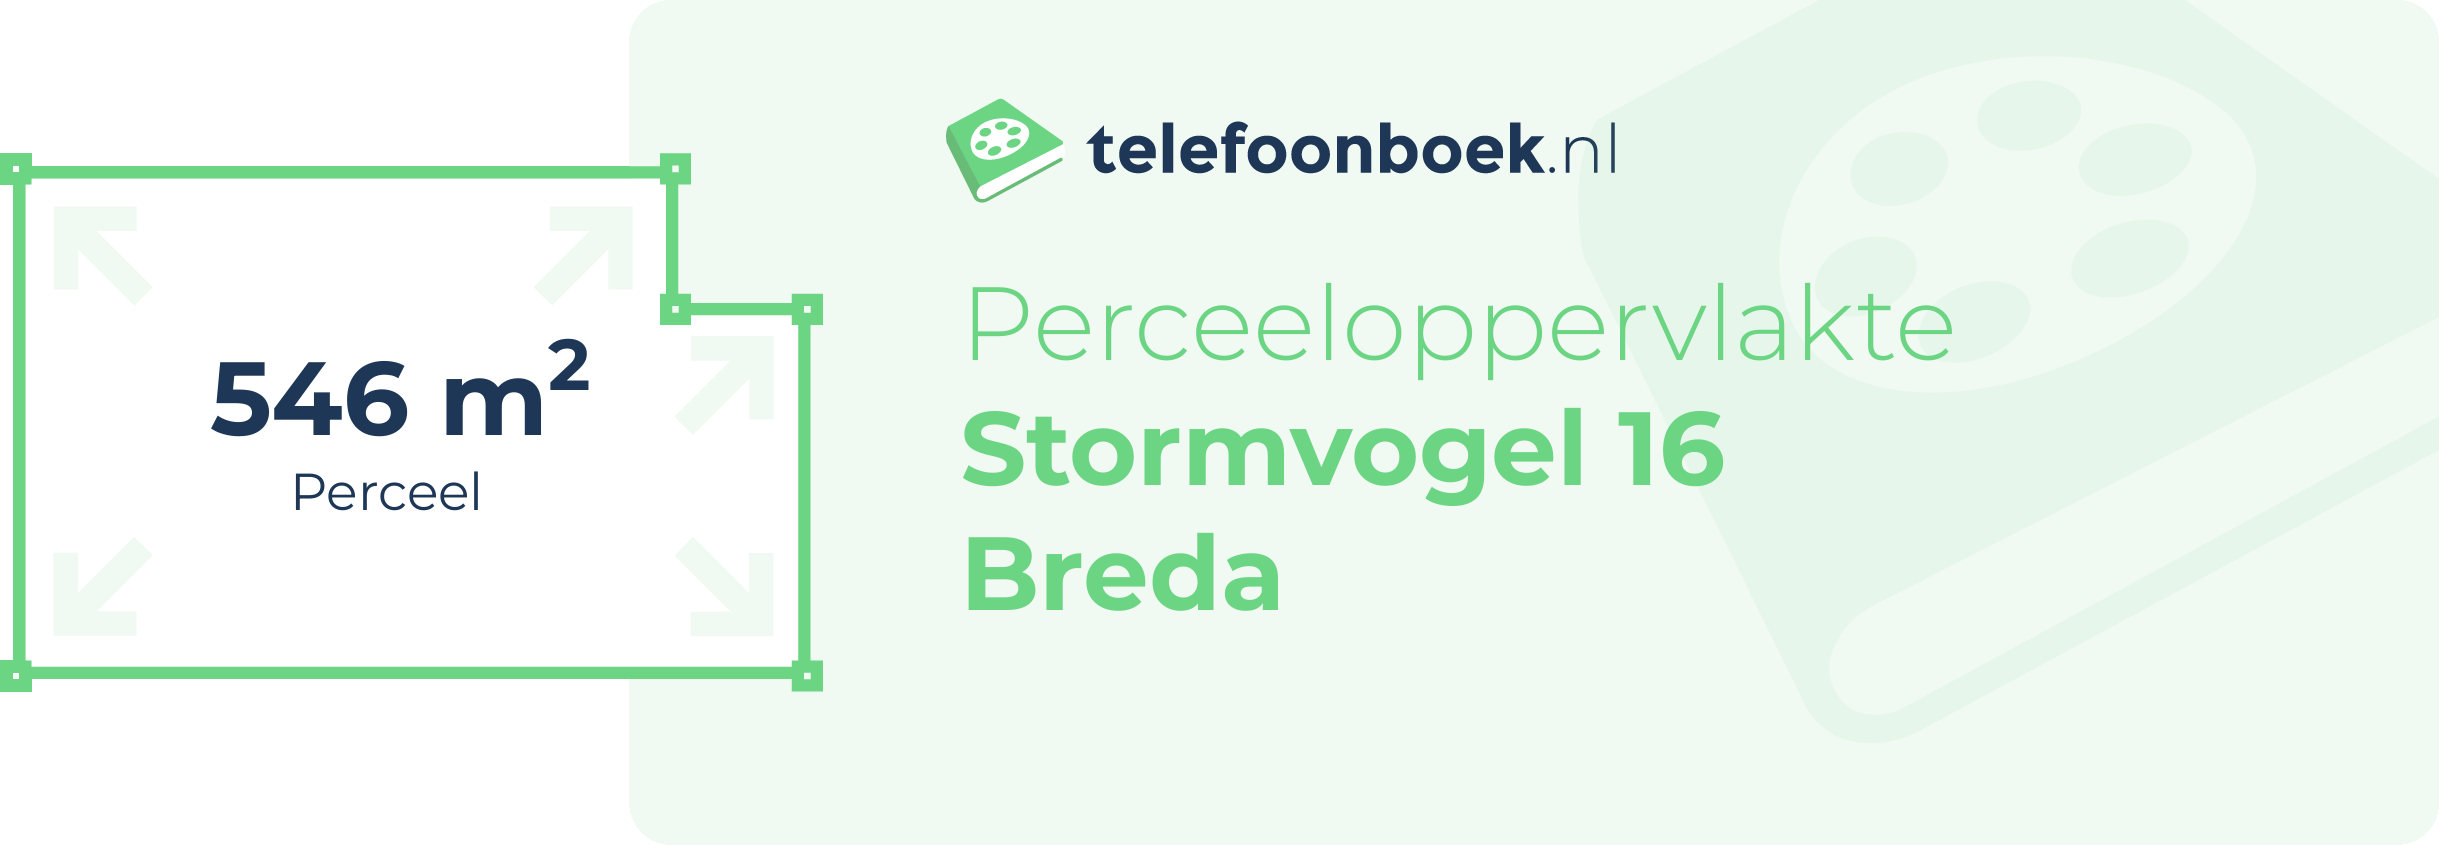 Perceeloppervlakte Stormvogel 16 Breda